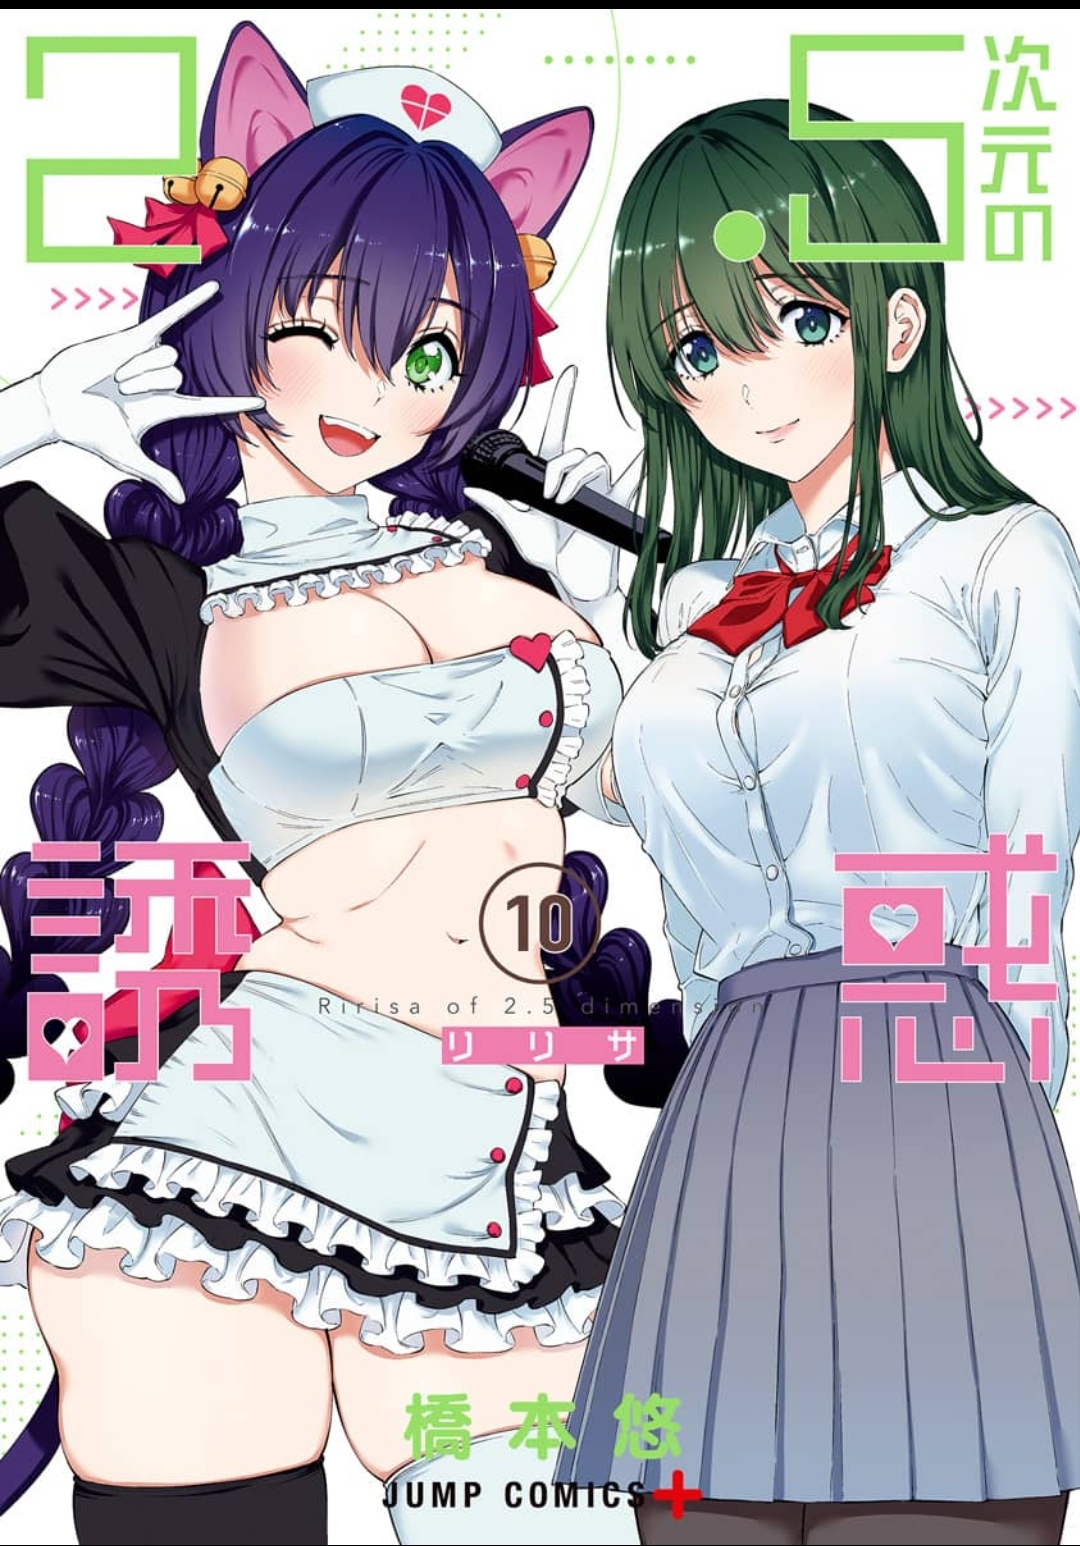 Manga Volume 10 2 5 Dimensional Seduction Wiki Fandom